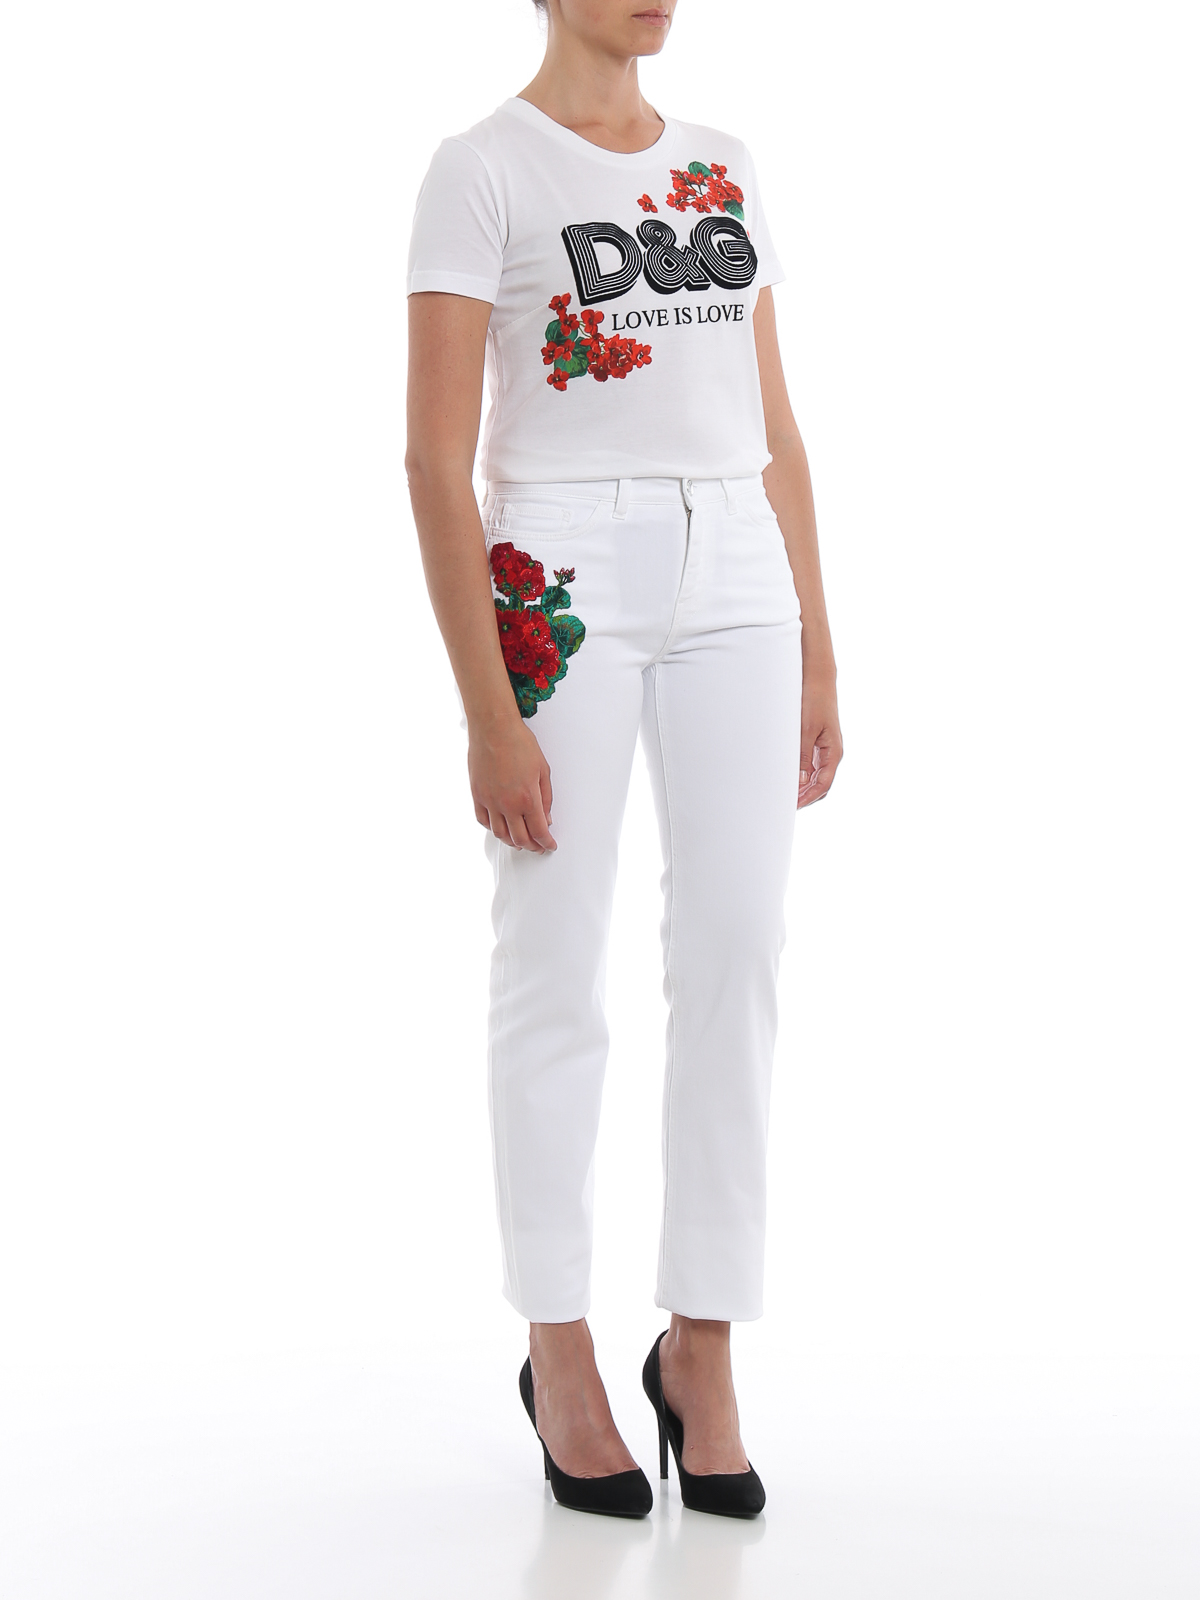 Maxim Vader fage Verrijken Straight leg jeans Dolce & Gabbana - Girly floral embroidered white jeans -  FTAQ5ZG8980W0111